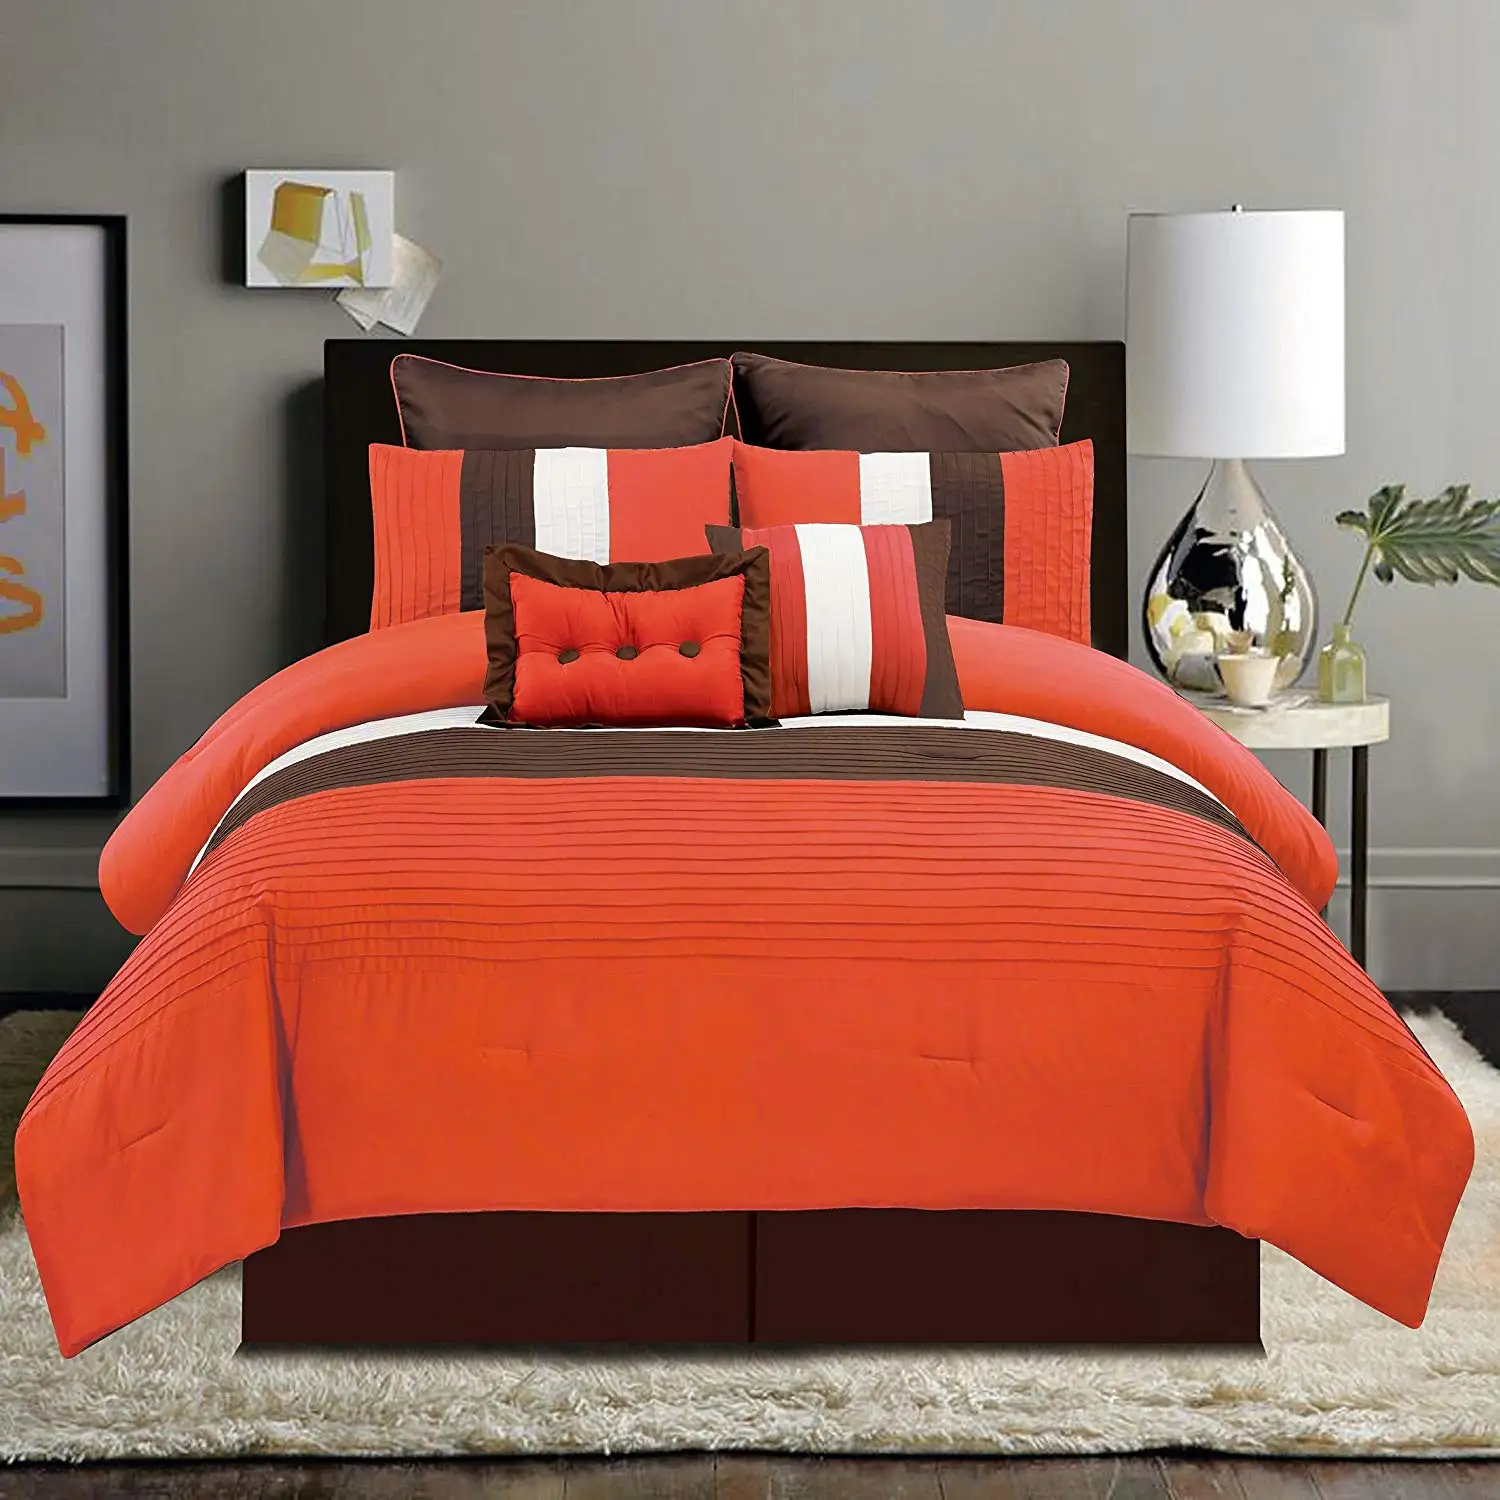 Orange Comforter Sets - girls orange comforter | on Bright Orange ...